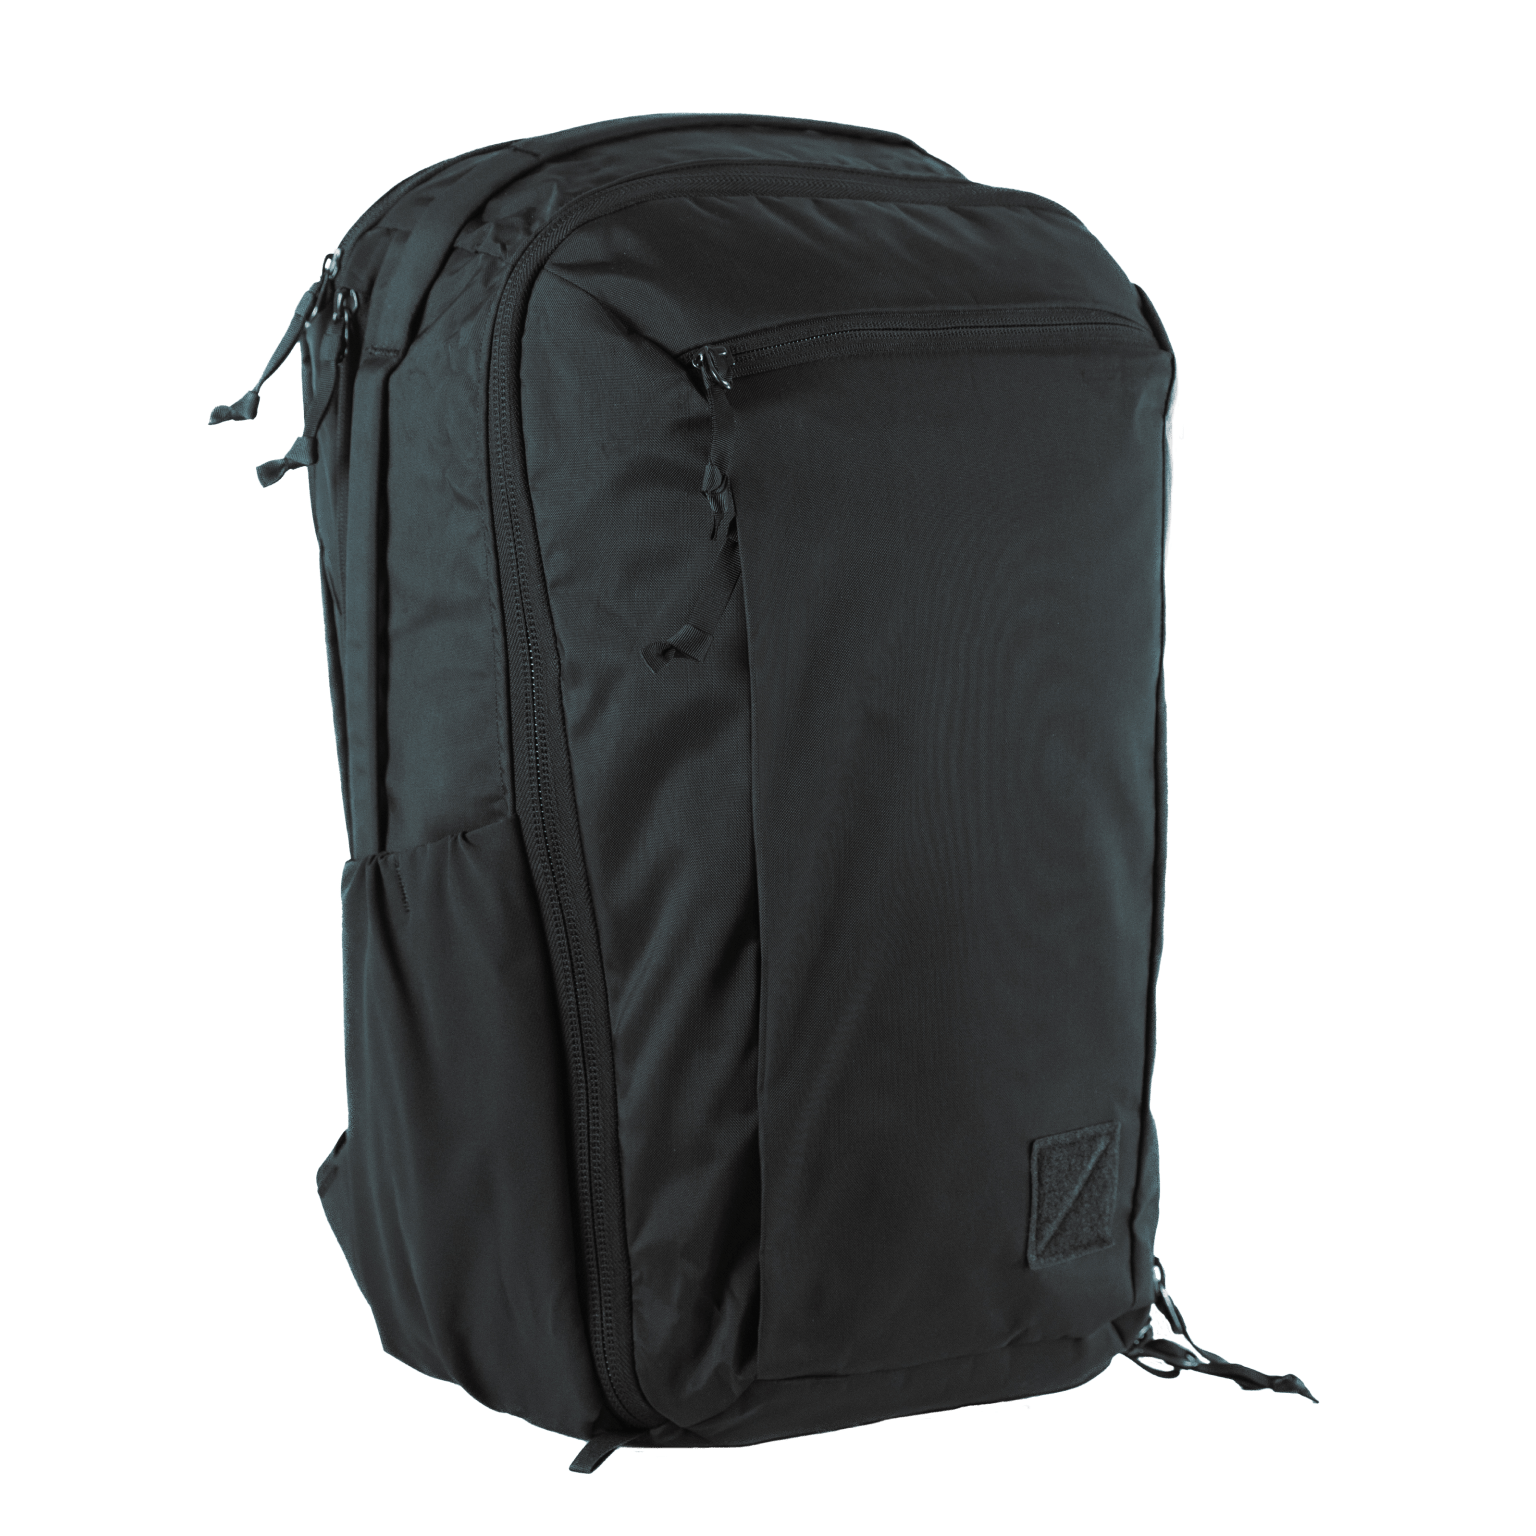 CIVIC Travel Bag 26L CTB26 - solution dyed black - front